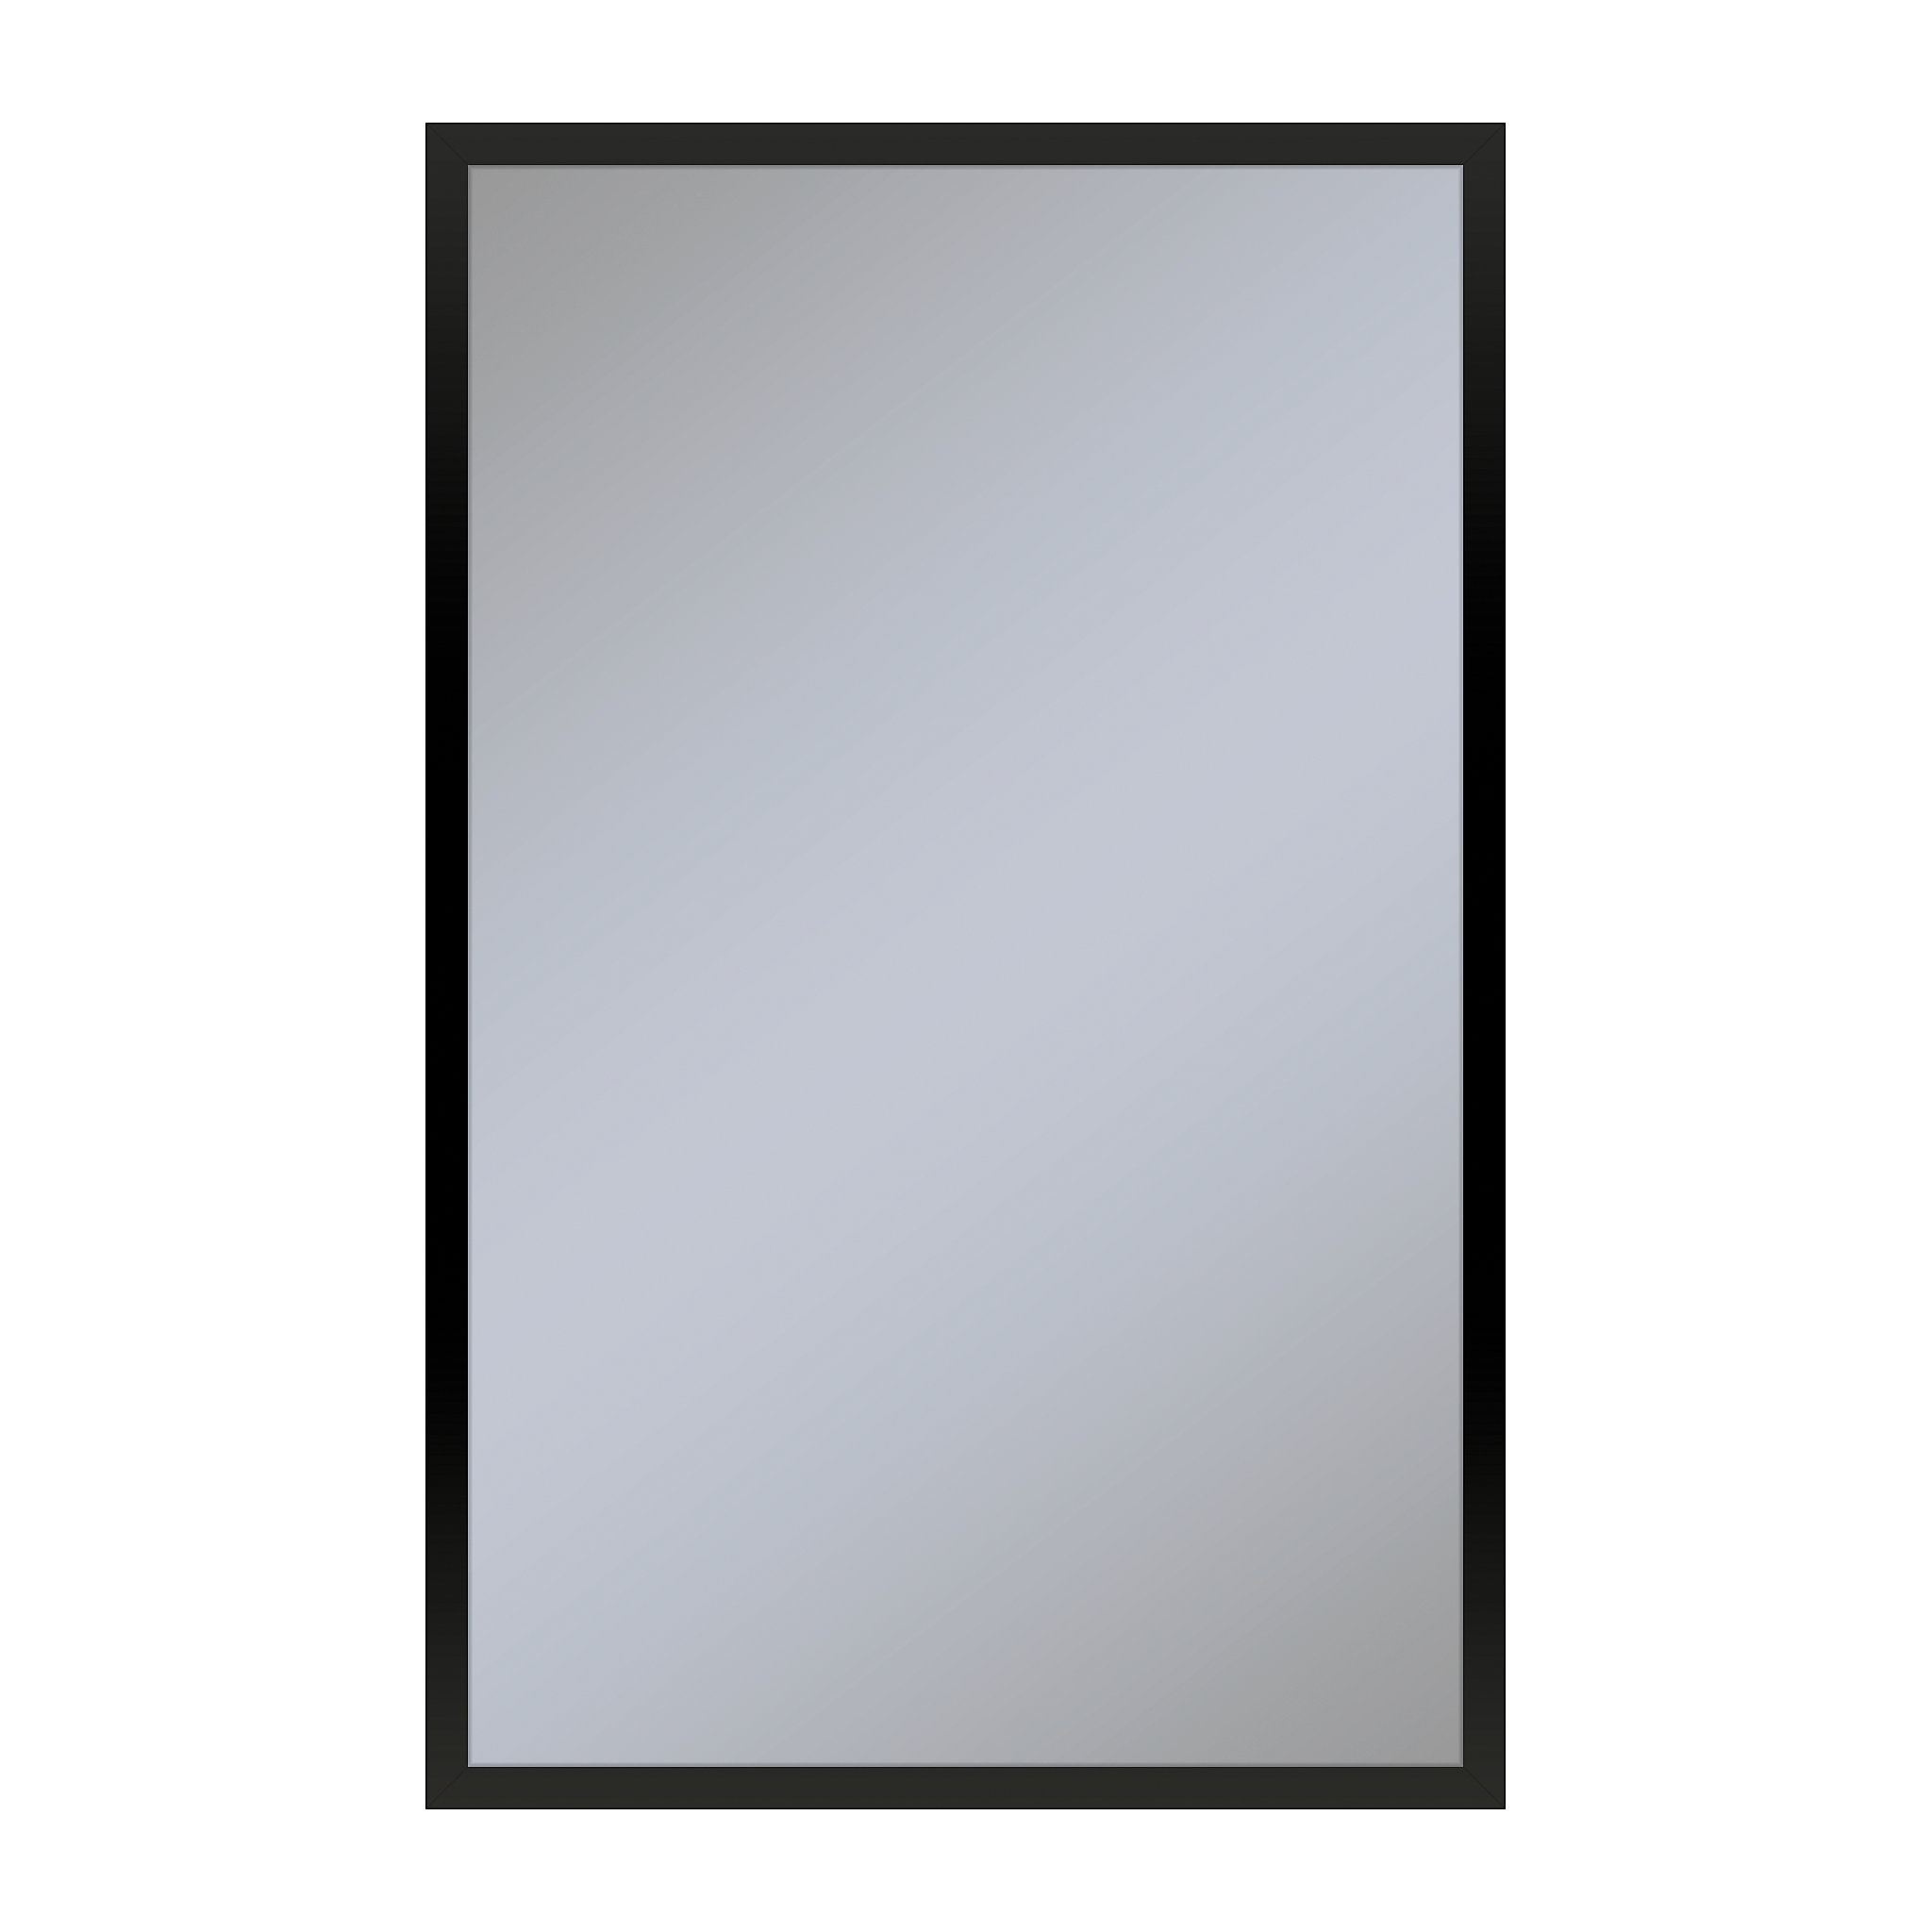 Robern PC2030D4TNN83 Profiles Framed Cabinet, 20" x 30" x 4", Matte Black, Non-Electric, Reversible Hinge